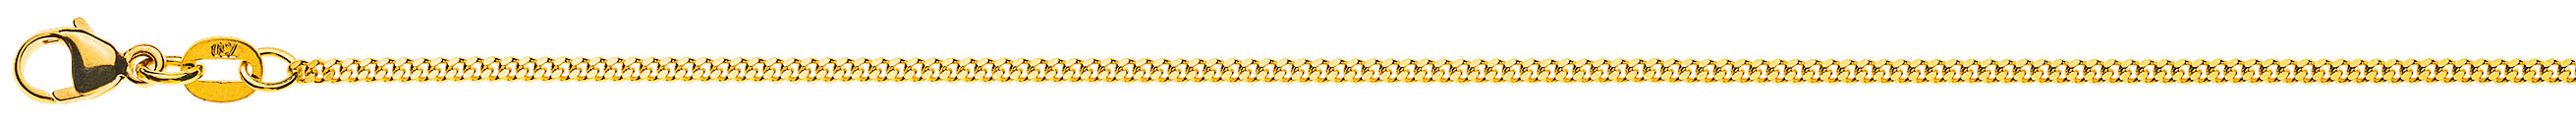 AURONOS Prestige Necklace yellow gold 18K curb chain polished 60cm 1.6mm